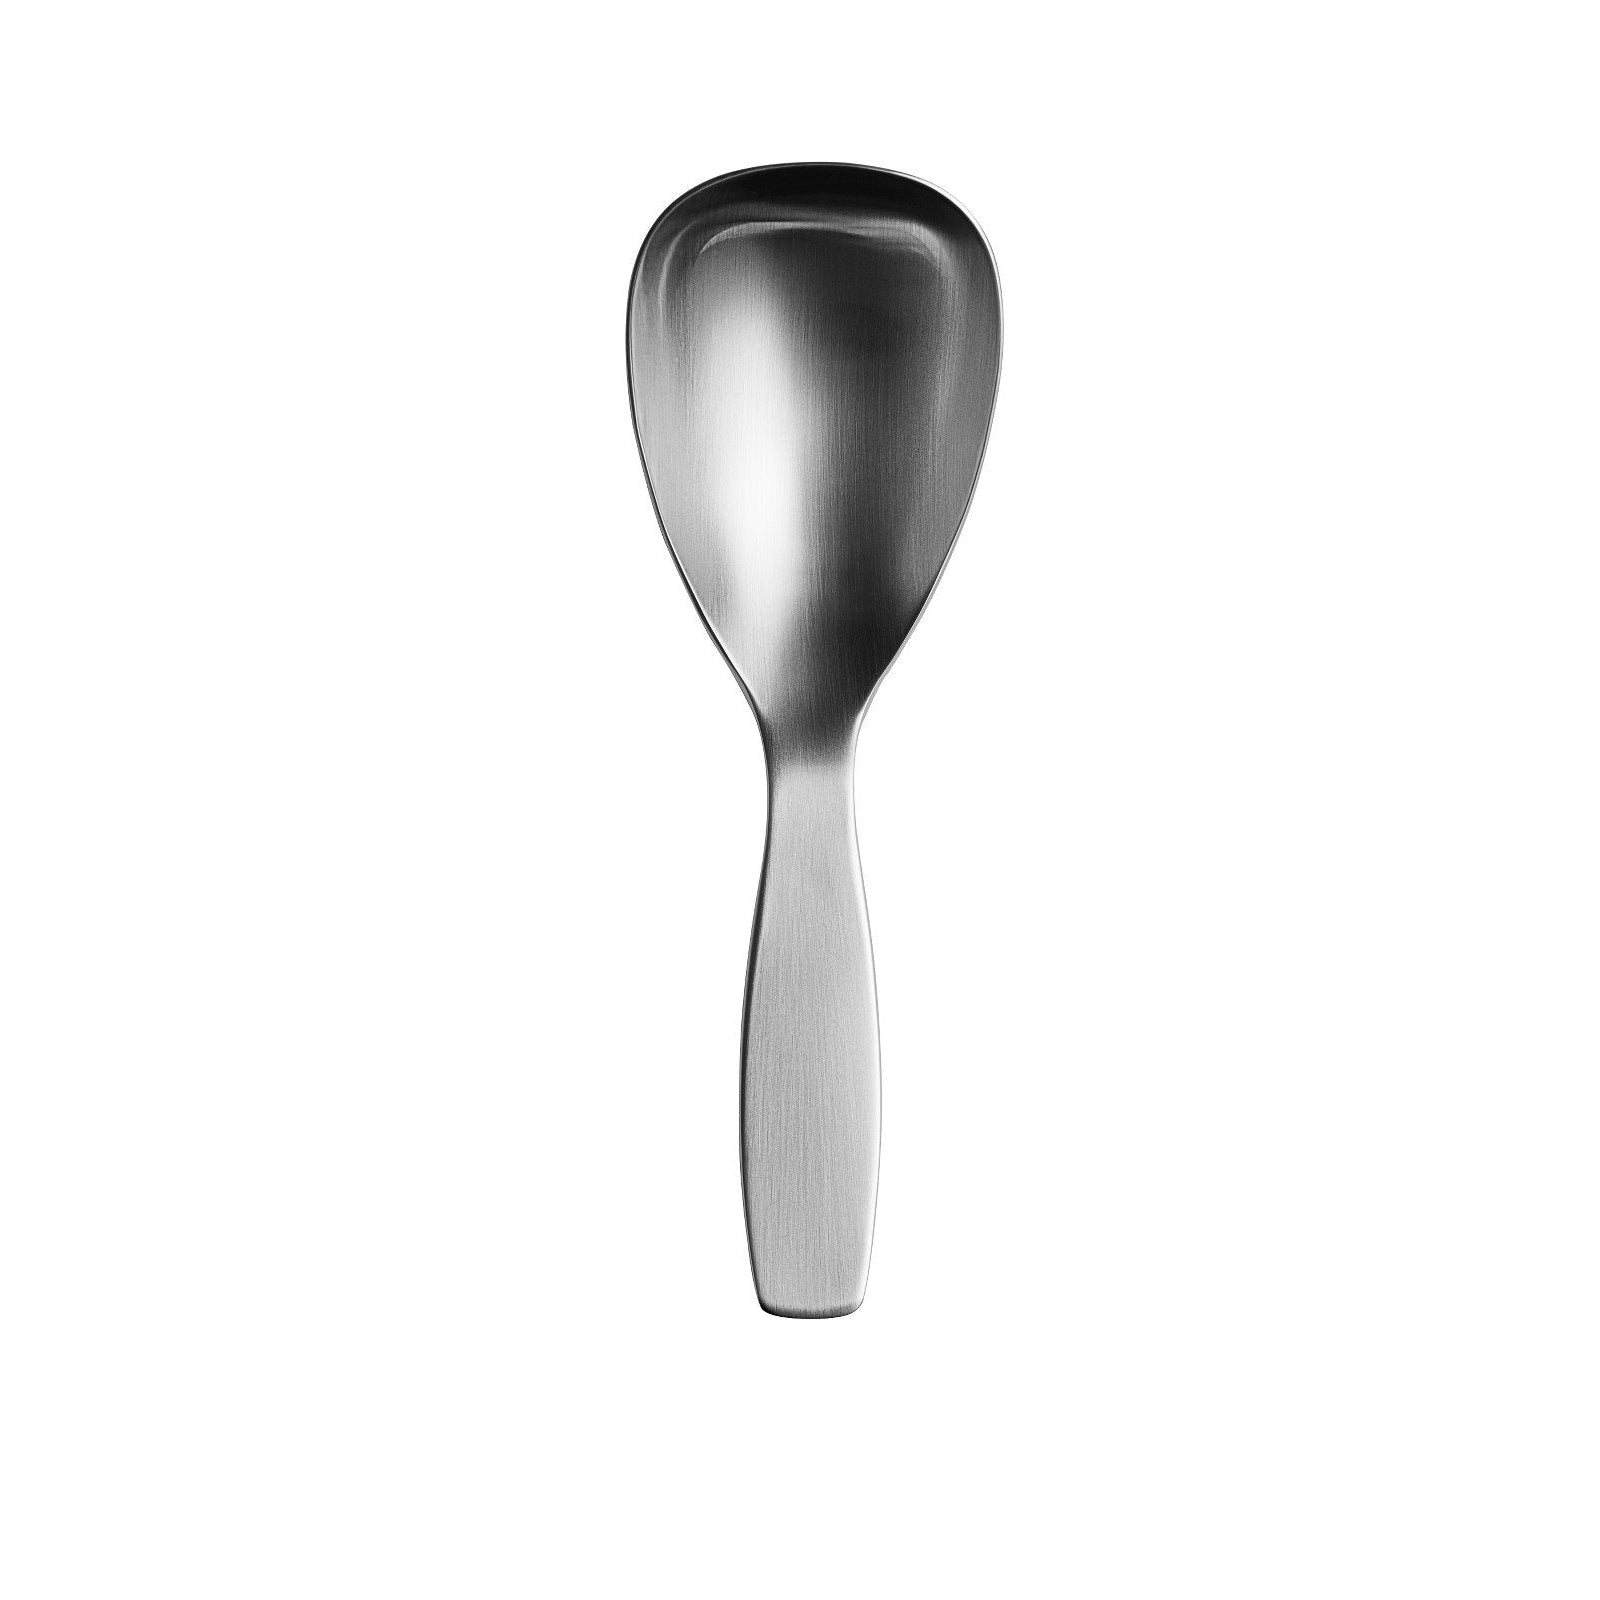 Iittala Collective Tools Serve Spoon, Medium